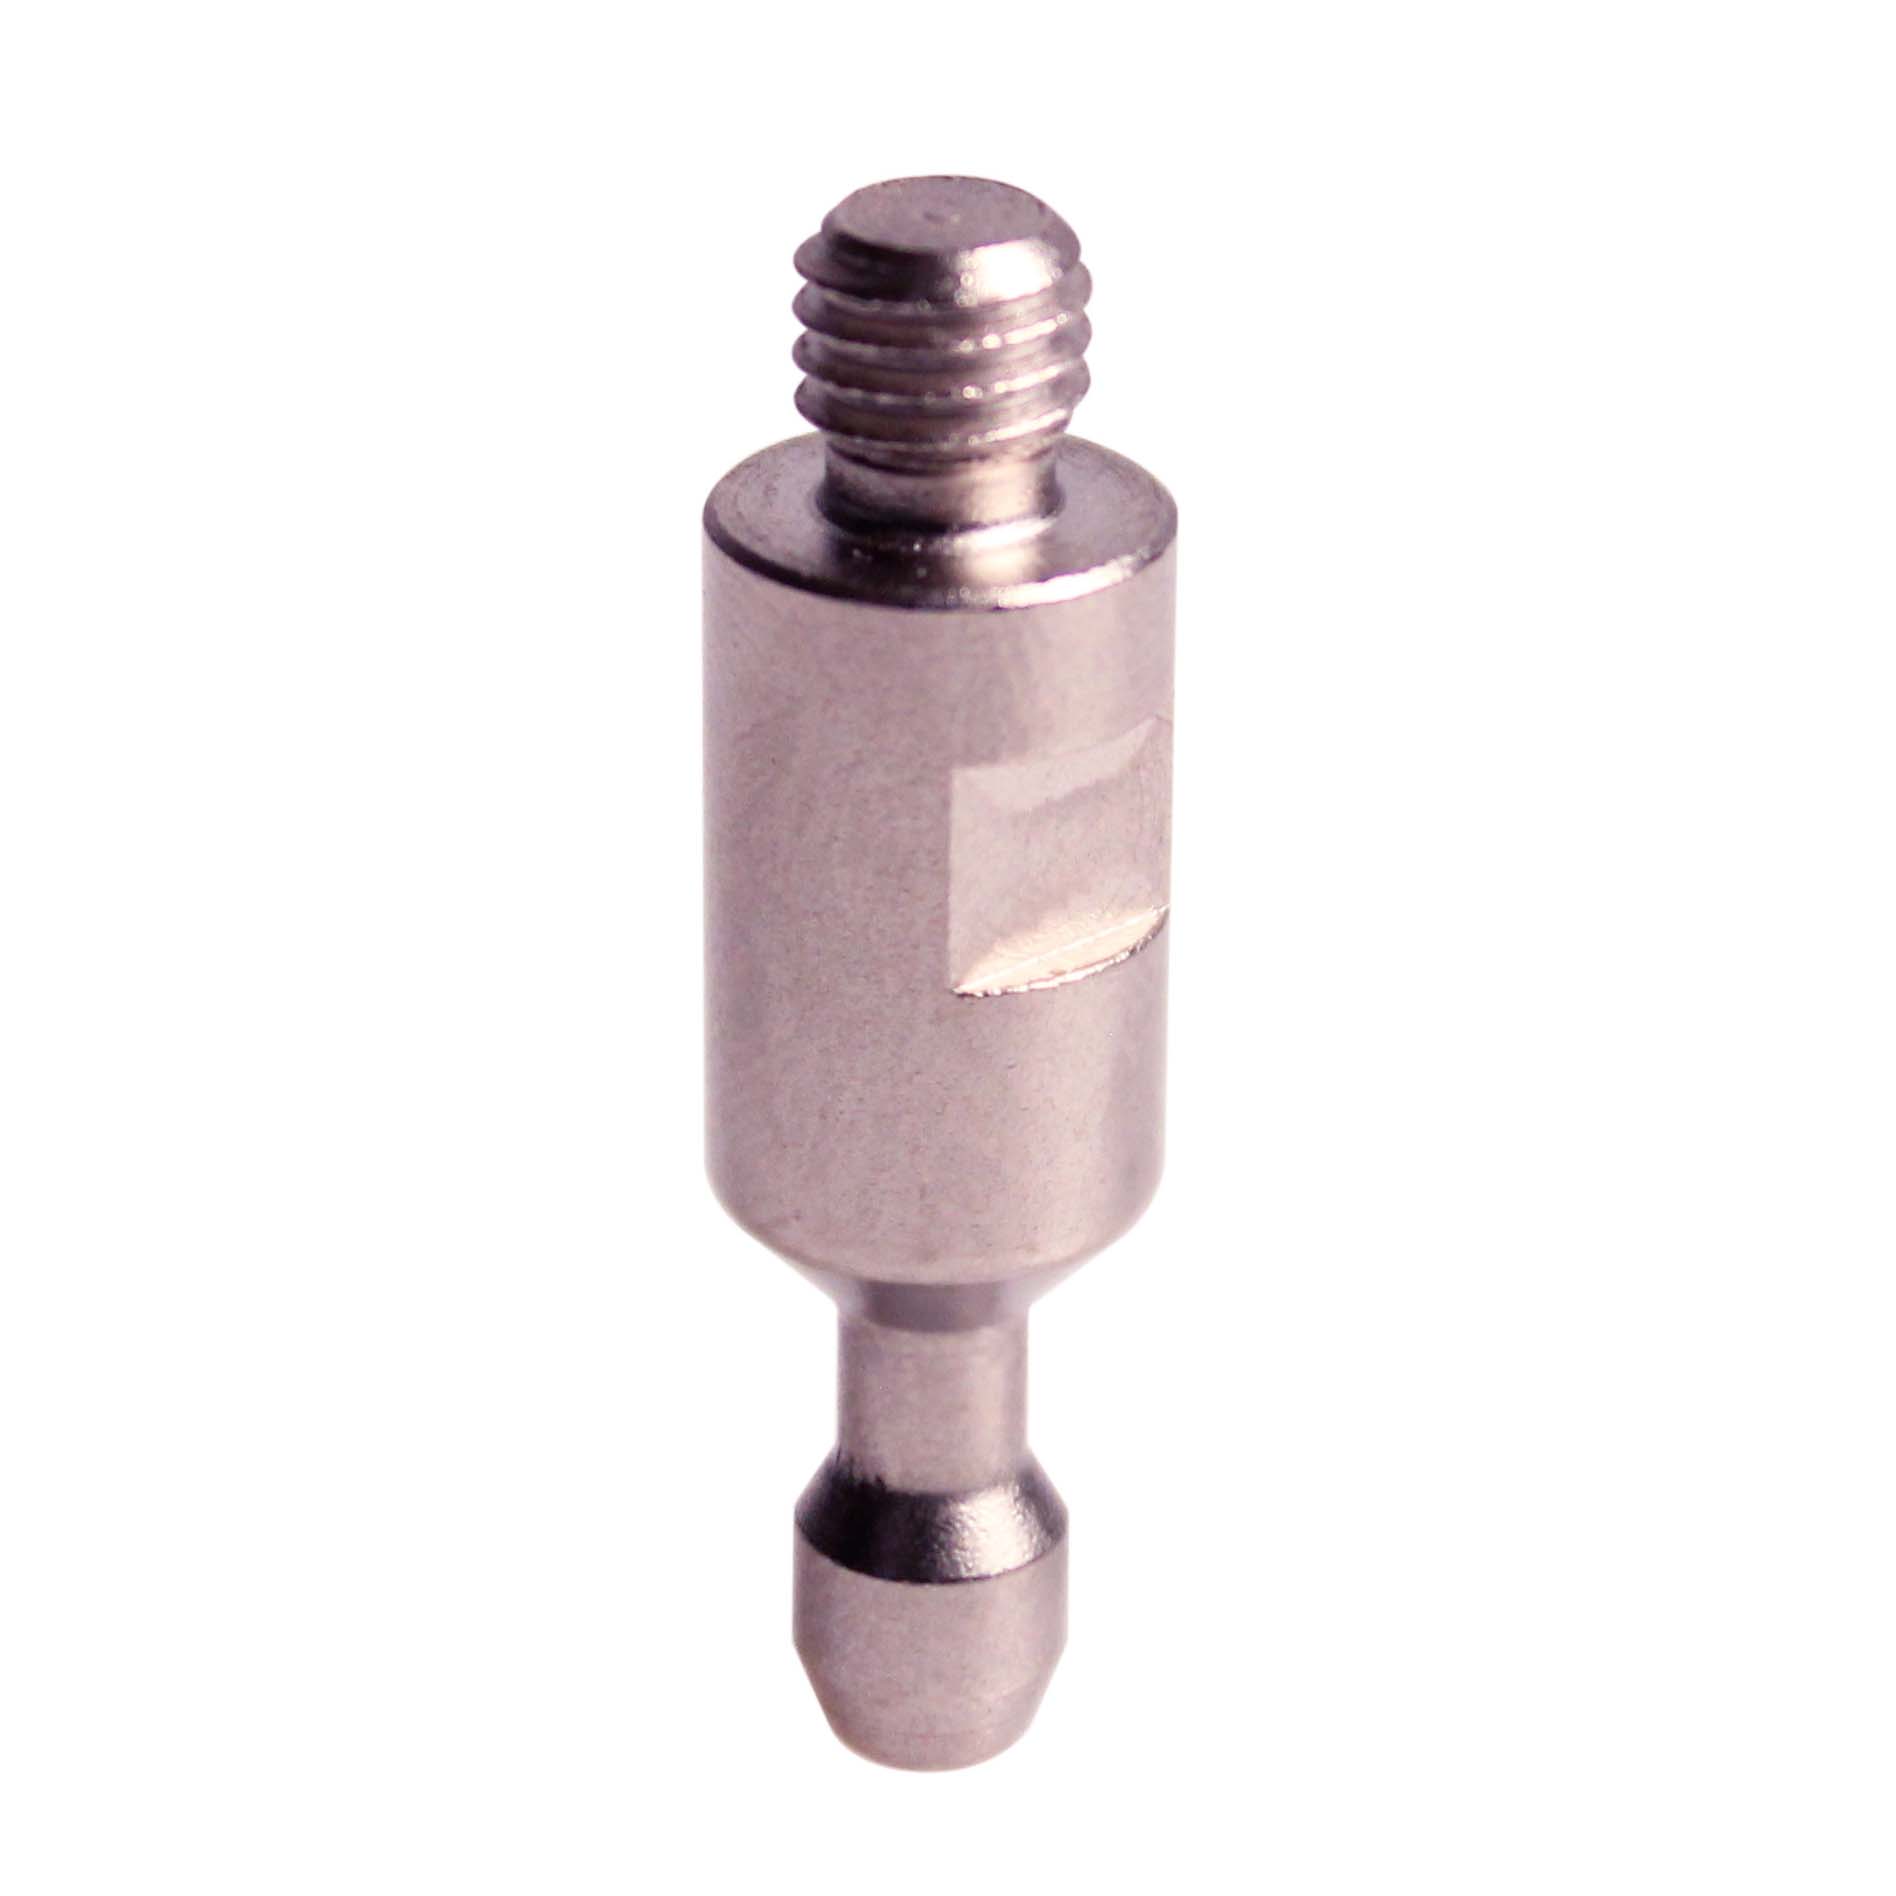 Locking pin for bush - +180°C - Natural finish steel - 